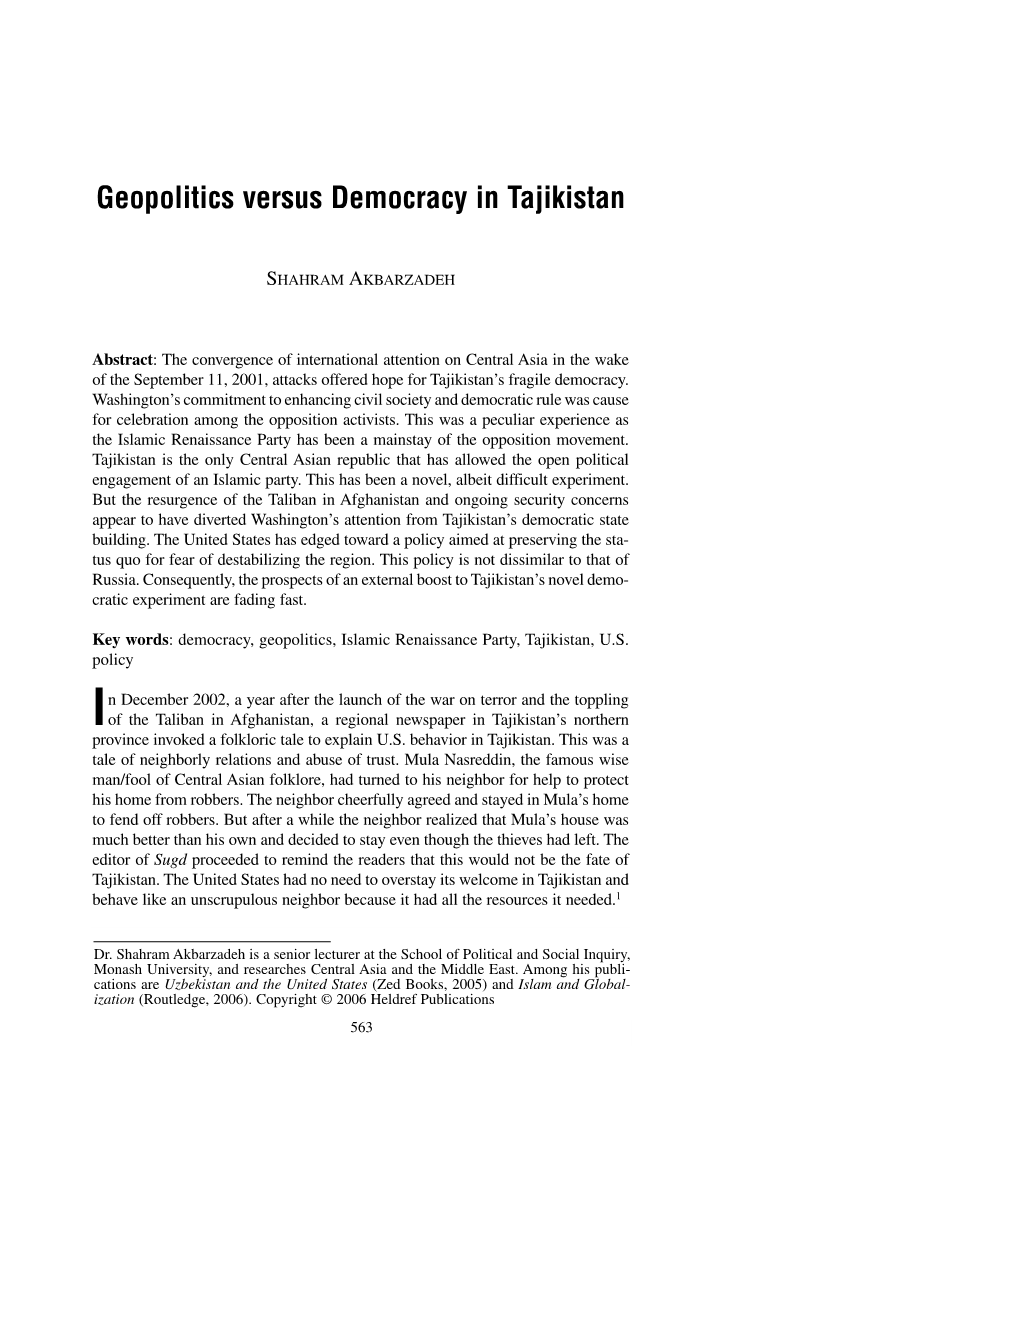 Geopolitics Versus Democracy in Tajikistan